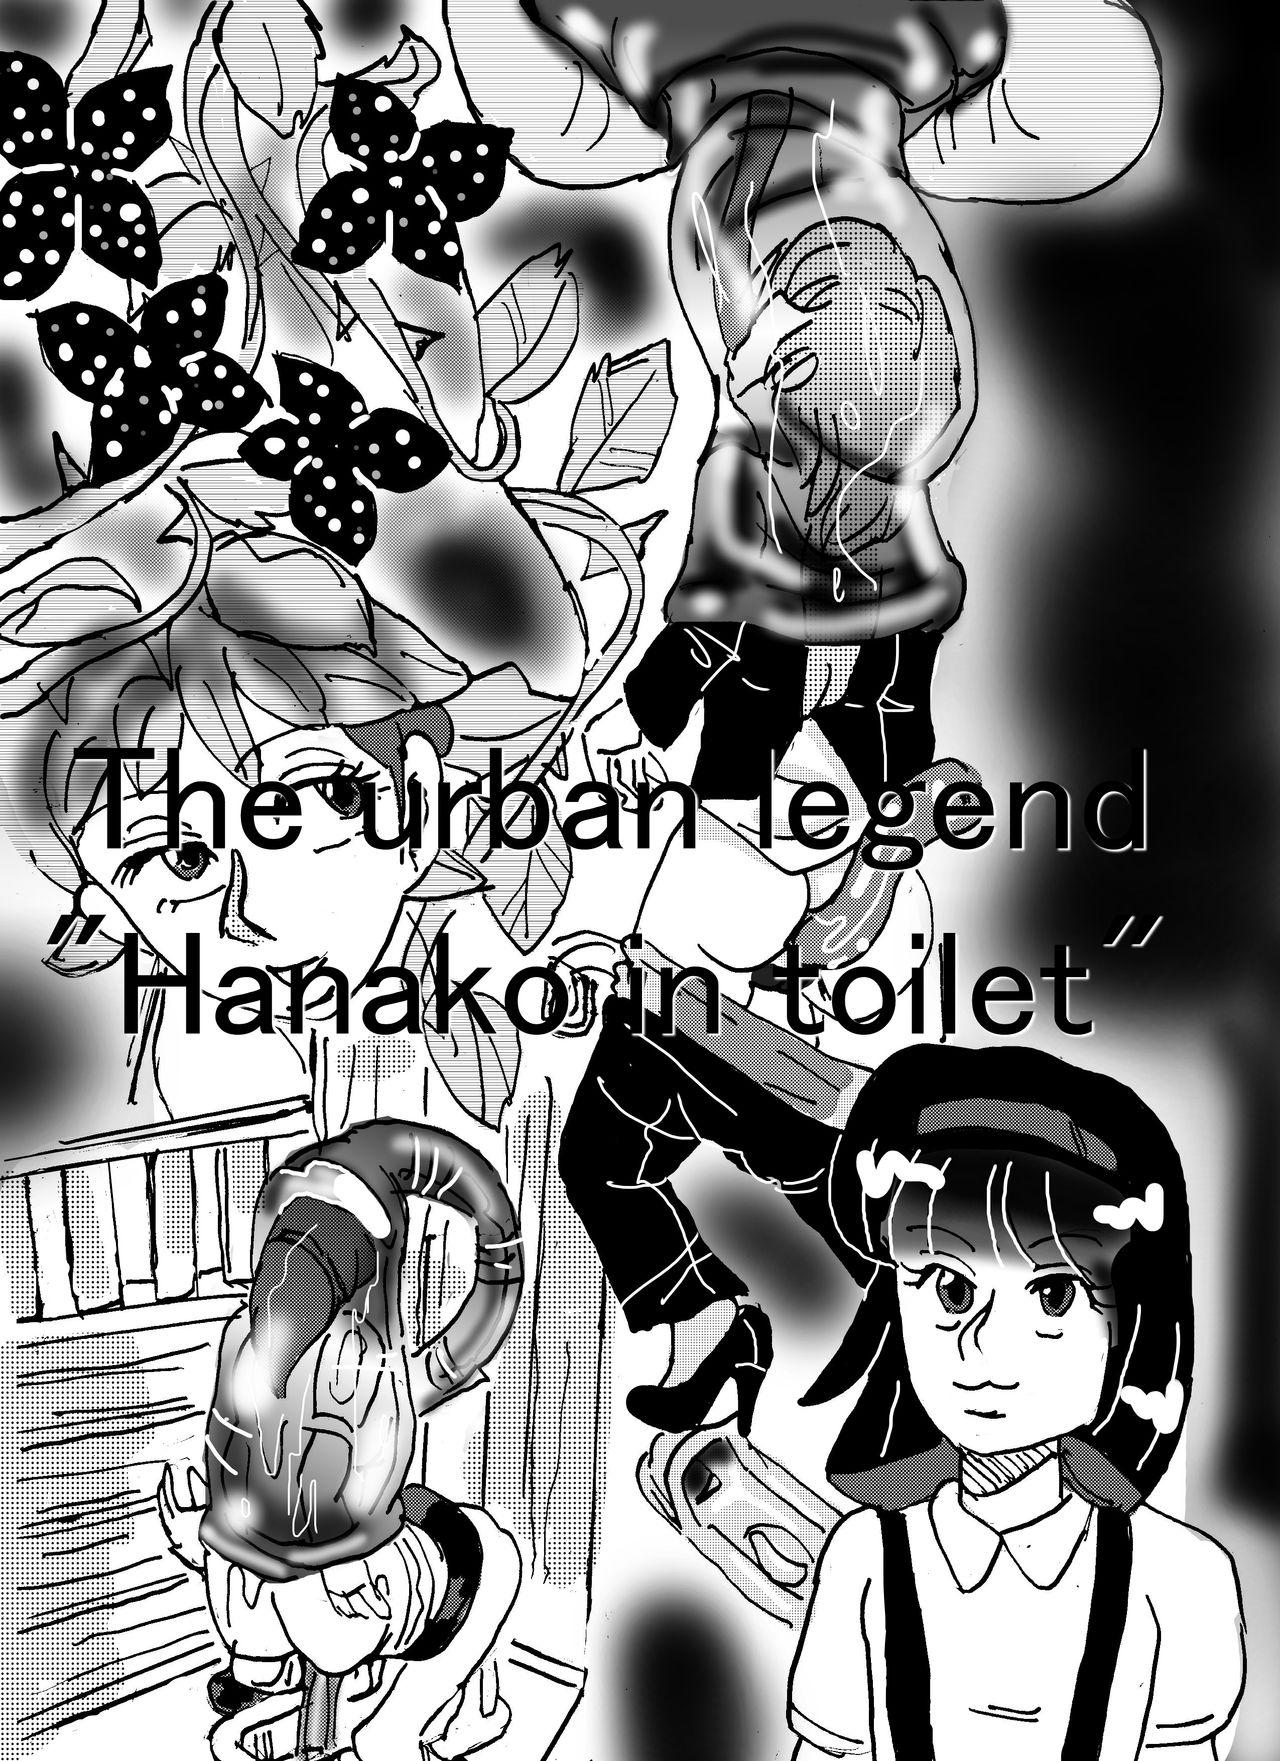 Perfect Teen Urban legend "Ha*ako in toilet" - Original Russian - Picture 1